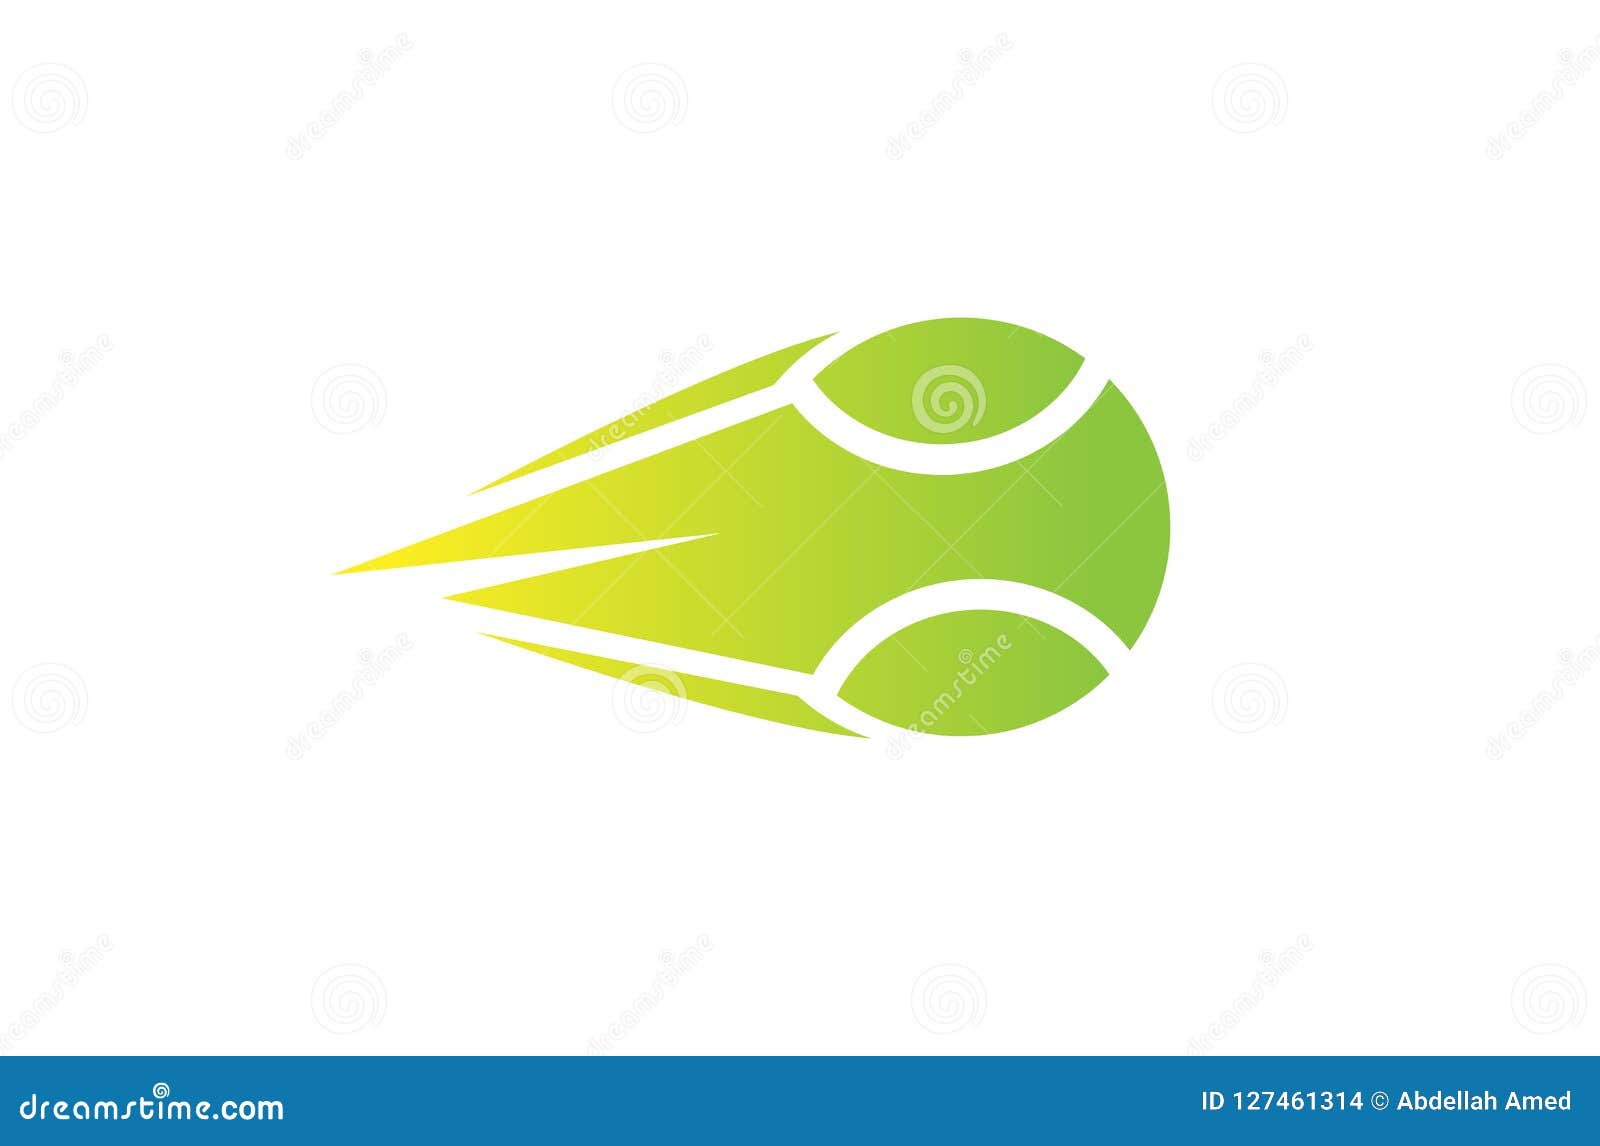 Plateau rendering Tulips Creative Green Speed Tennis Ball Logo Stock Vector - Illustration of ball,  symbol: 127461314